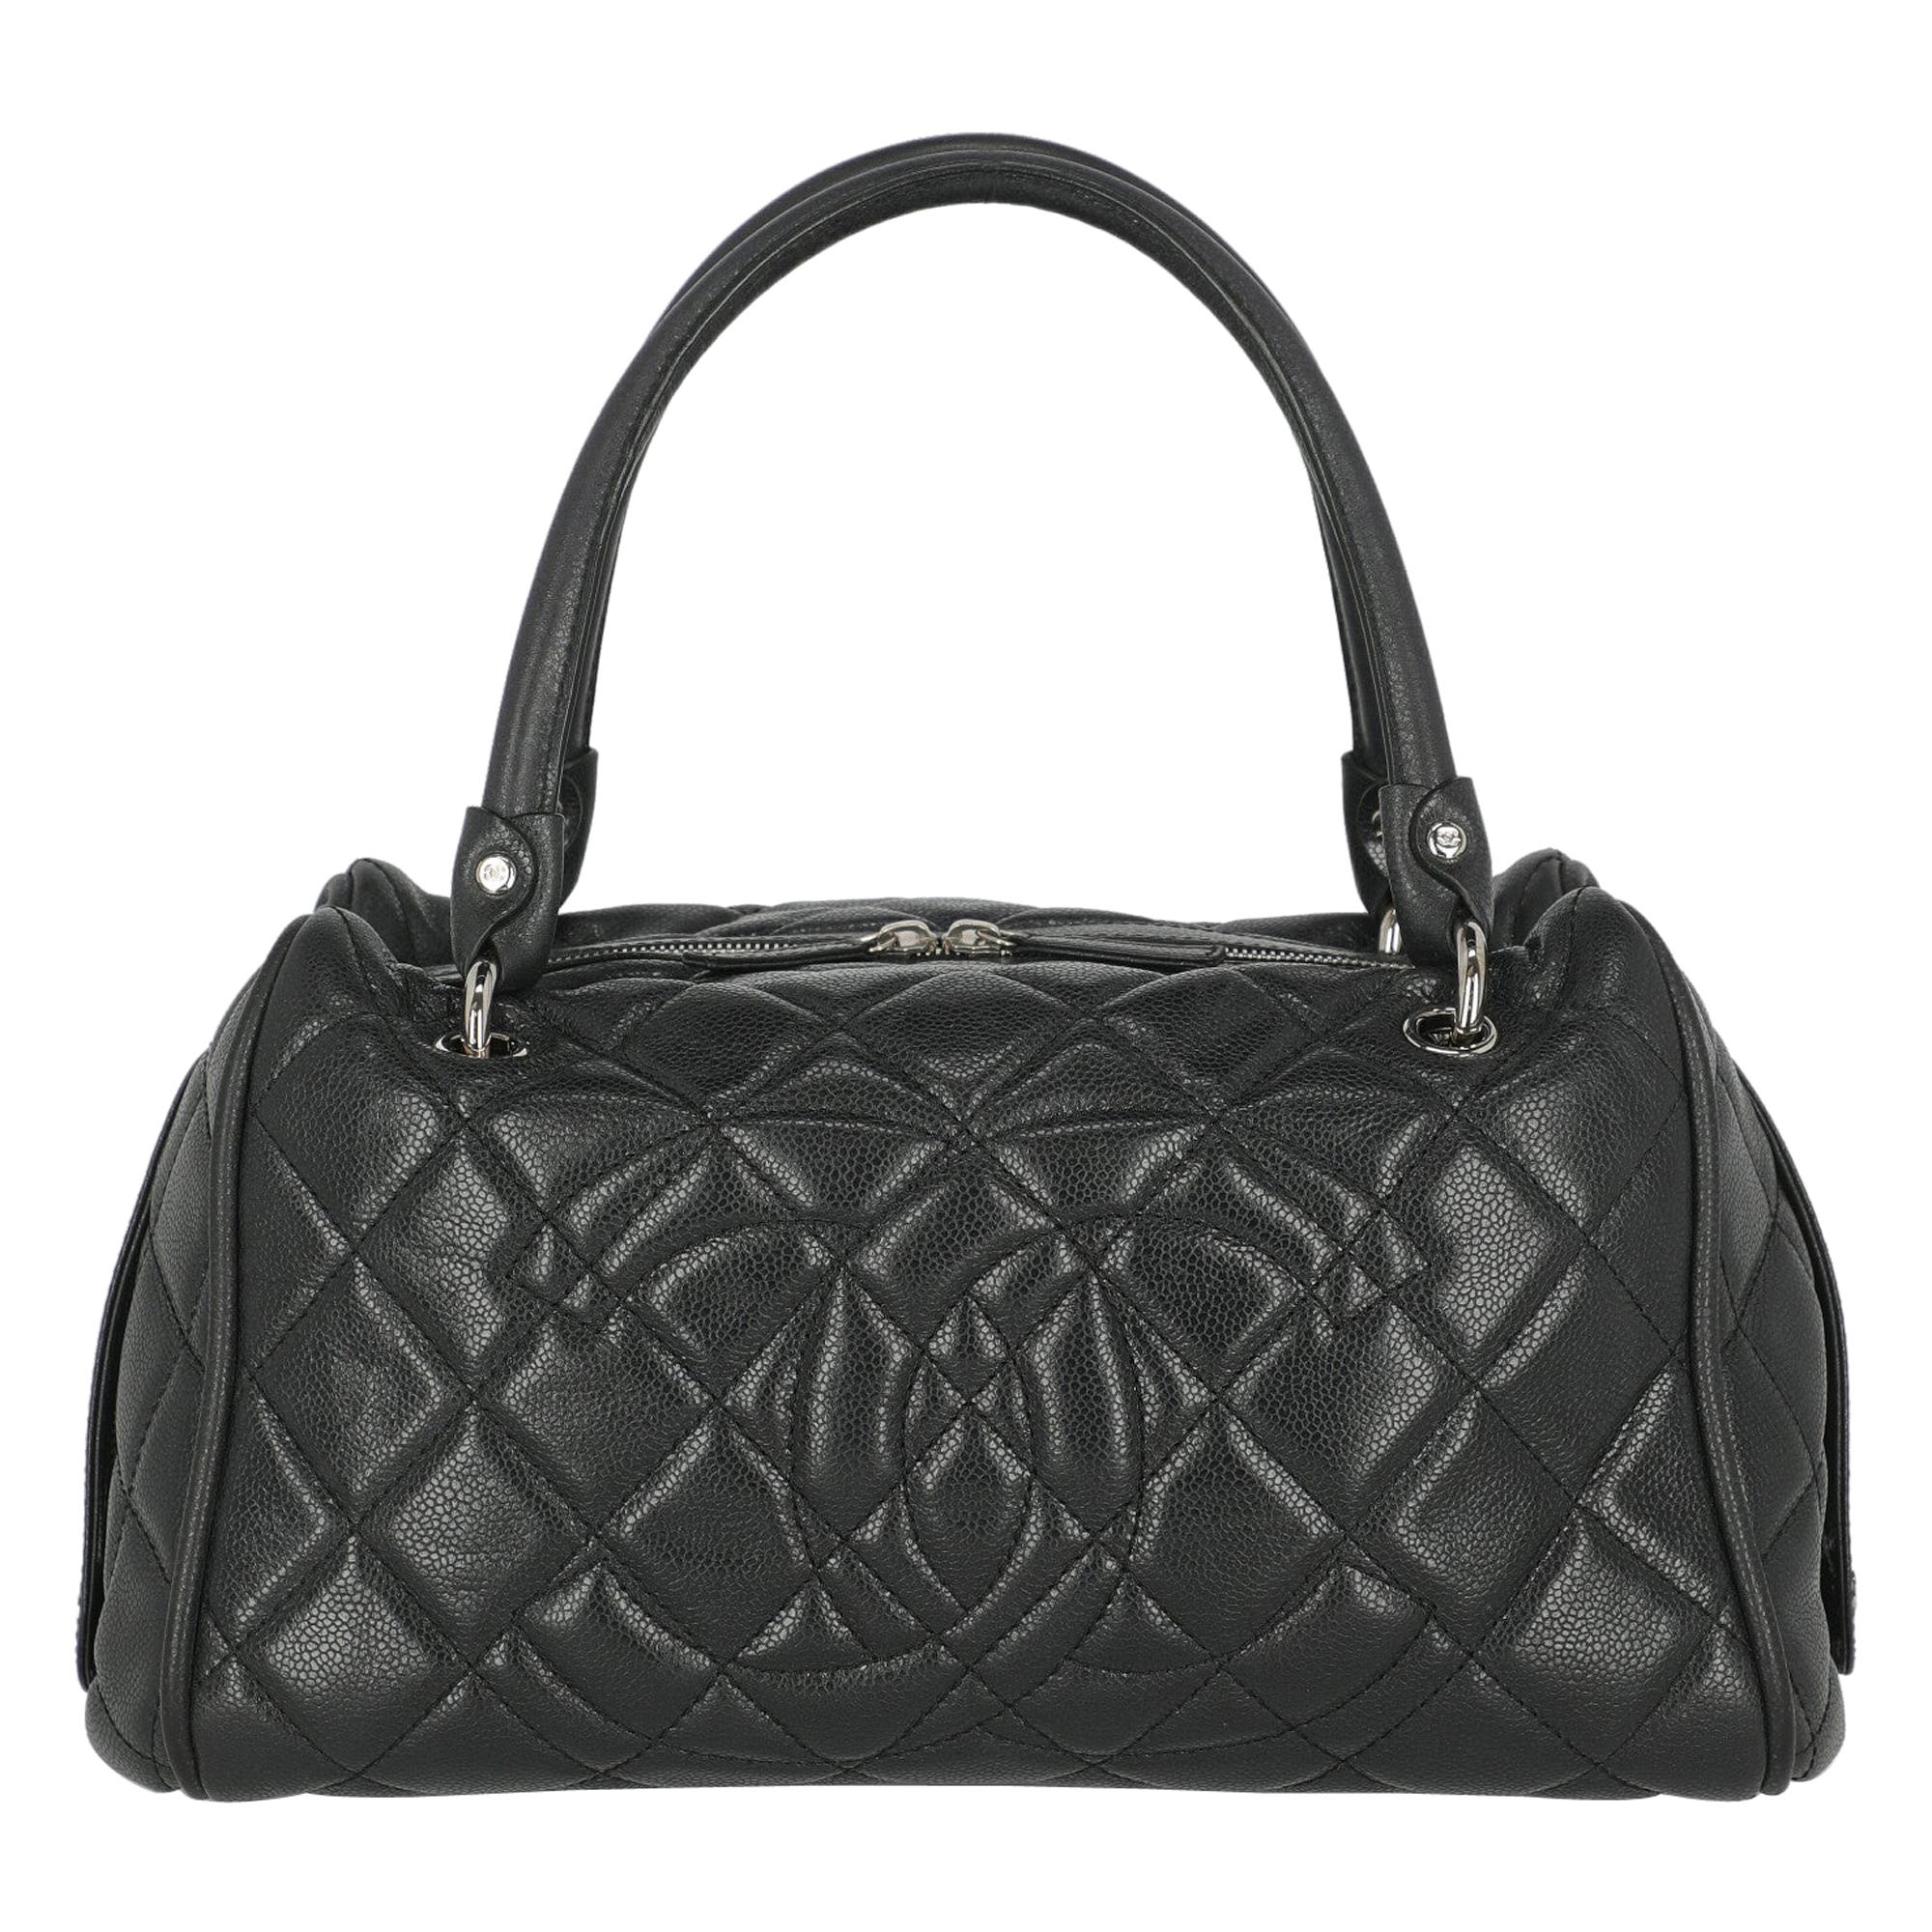 Chanel Women's Handbag Black Leather